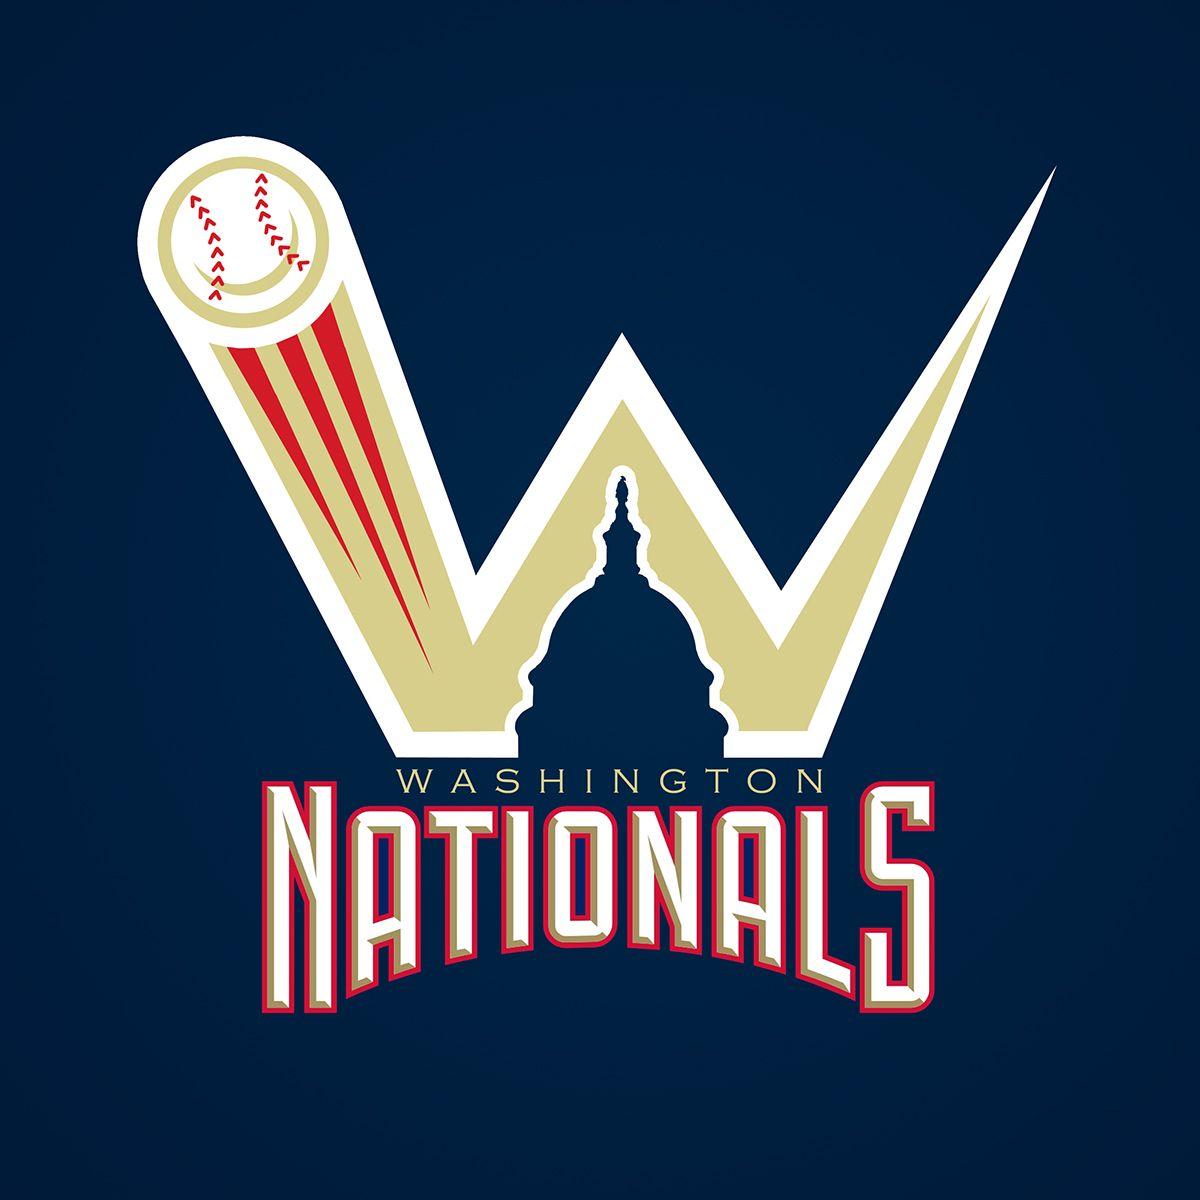 Washington Nationals Logo - Washington Nationals on Behance